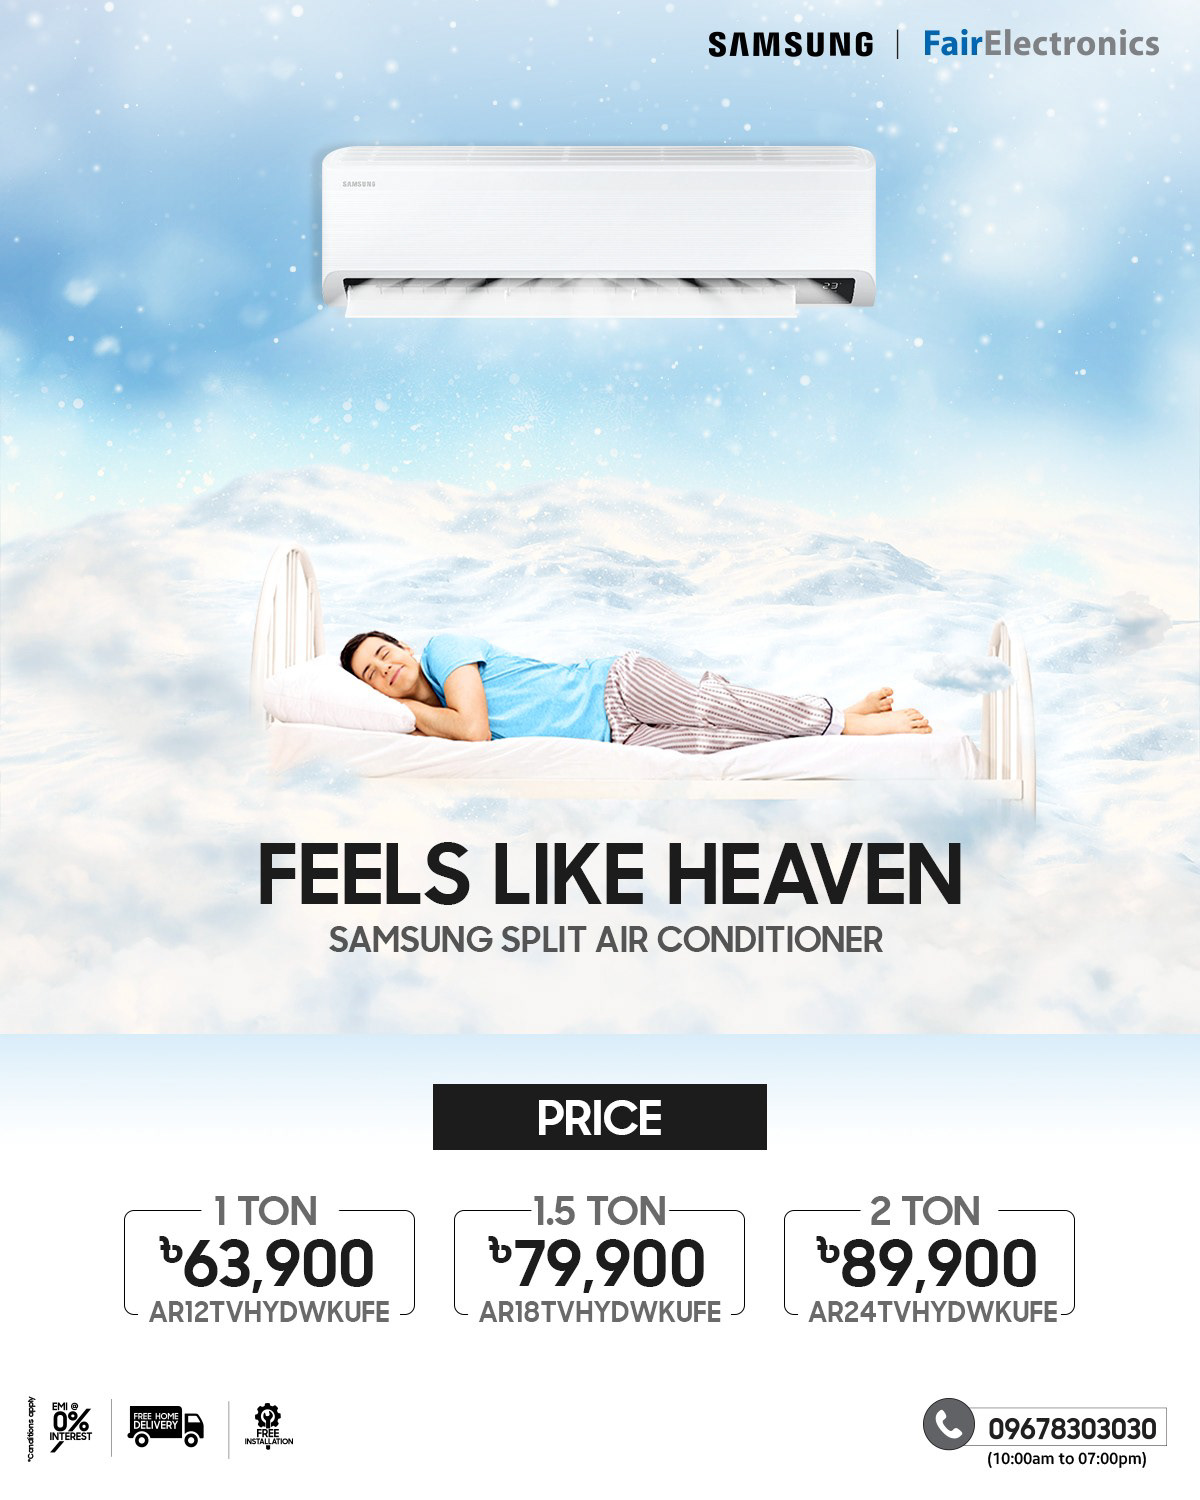 AC Air conditioner Samsung ads brand identity design Social media post